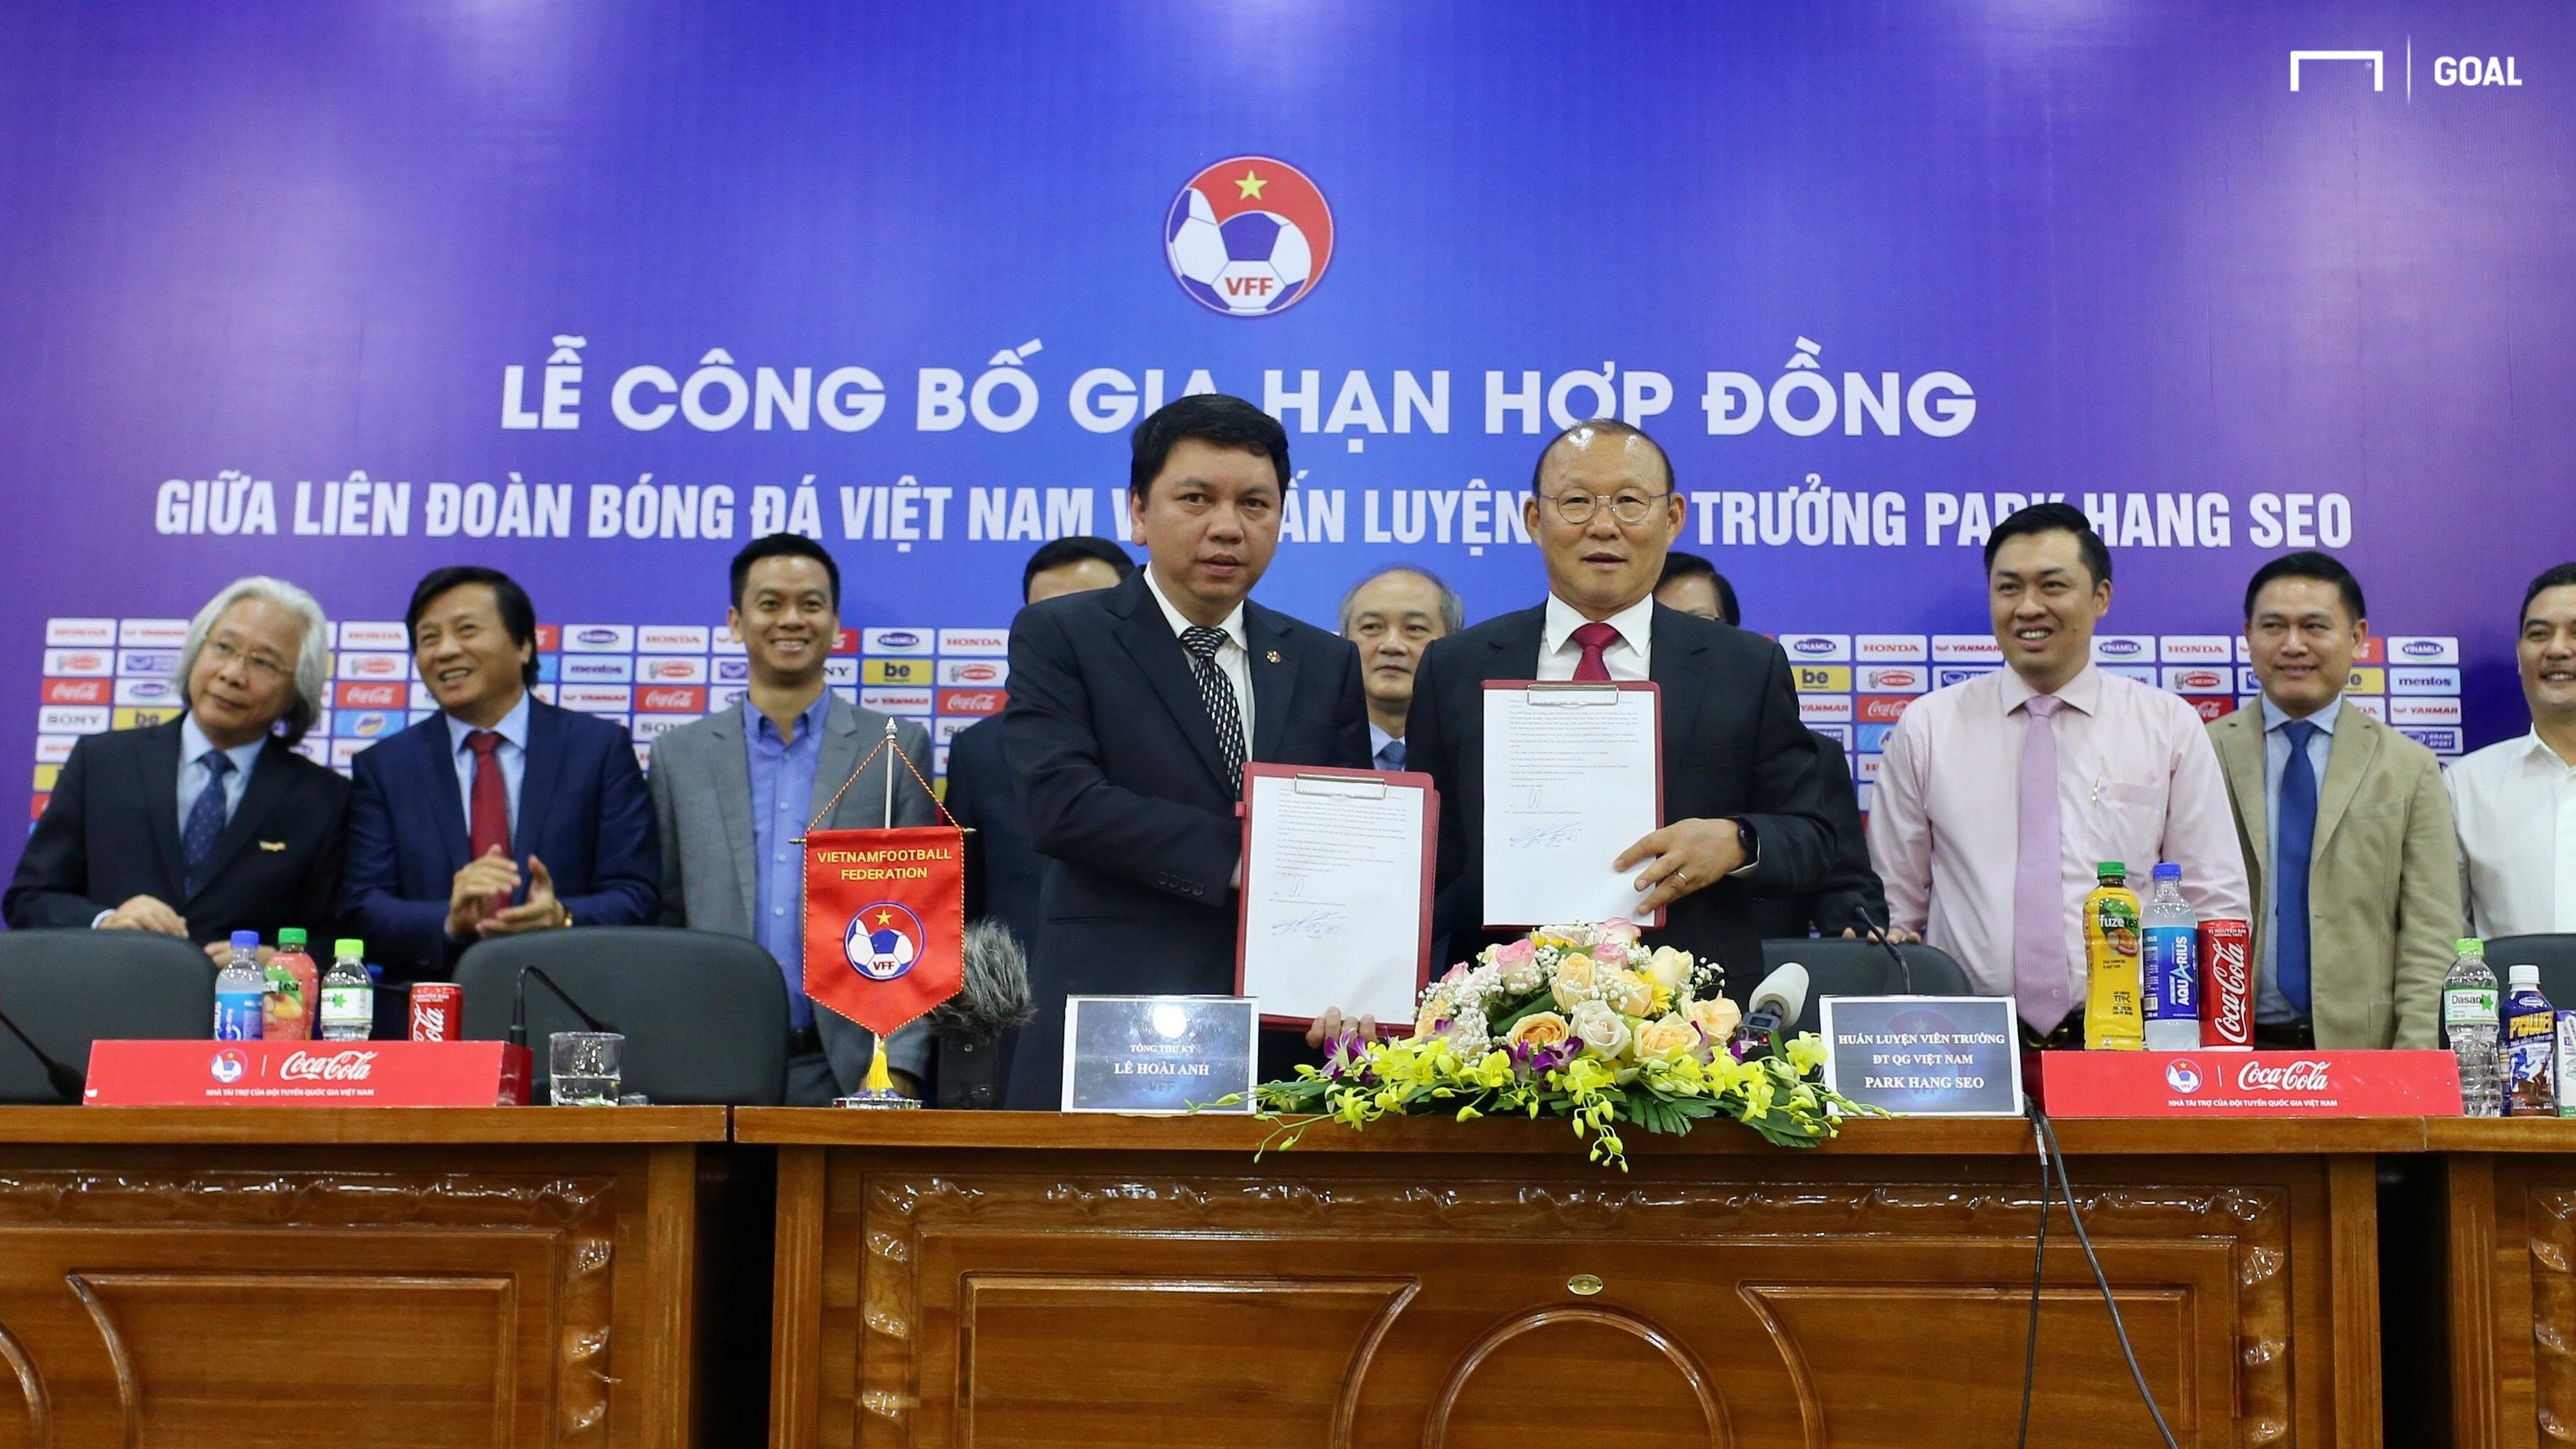 Coach Park Hang-seo - General Secretary Le Hoai Anh | Contract Signing Ceremony | 7 November 2019